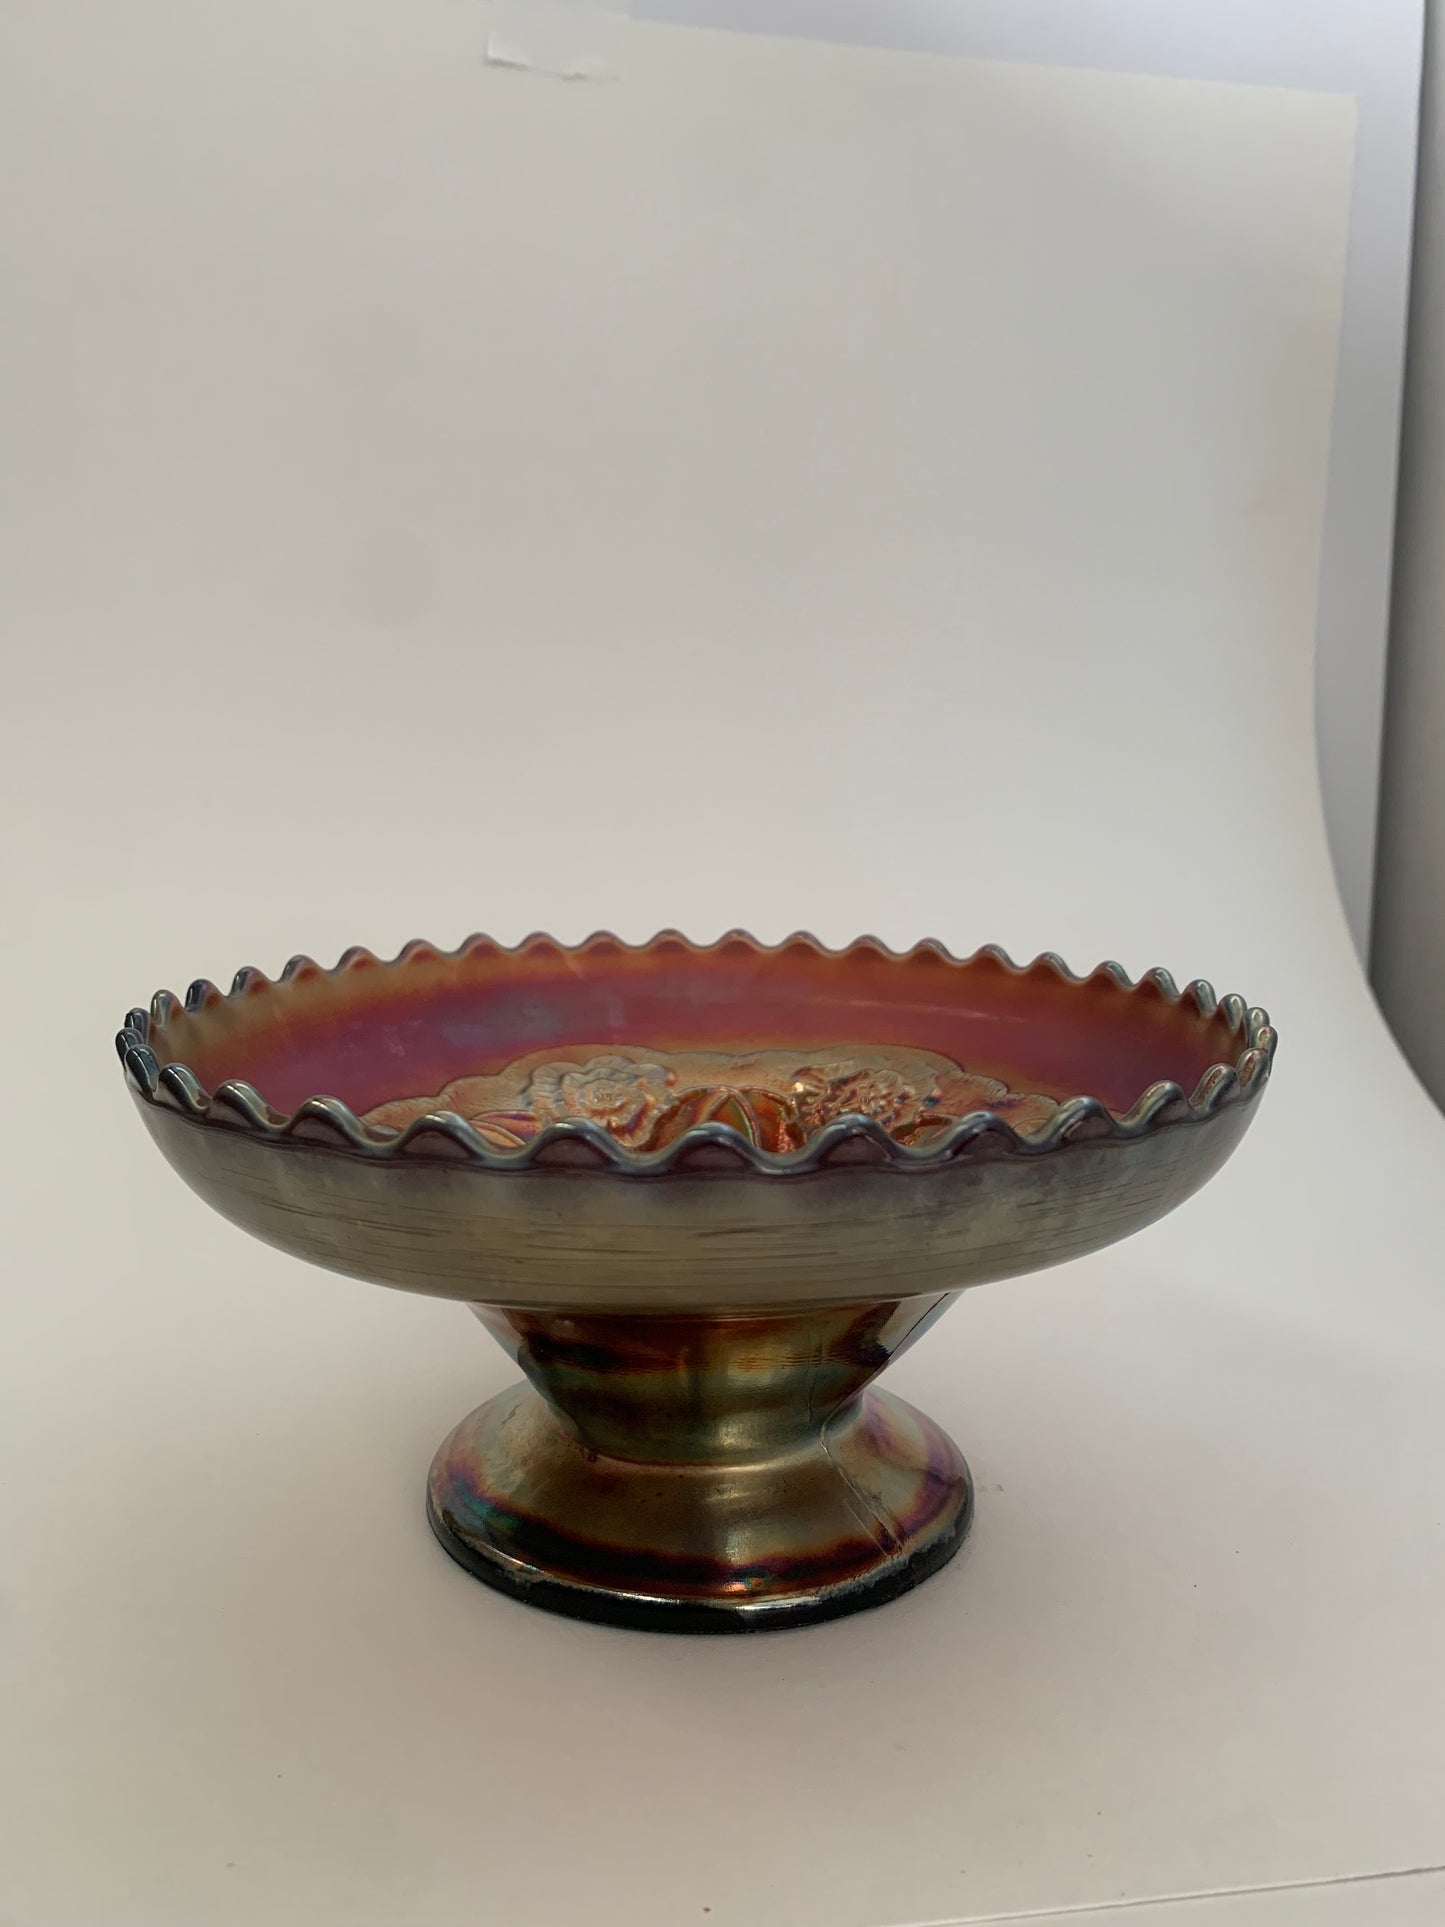 Carnival Glass Dish - Vintage